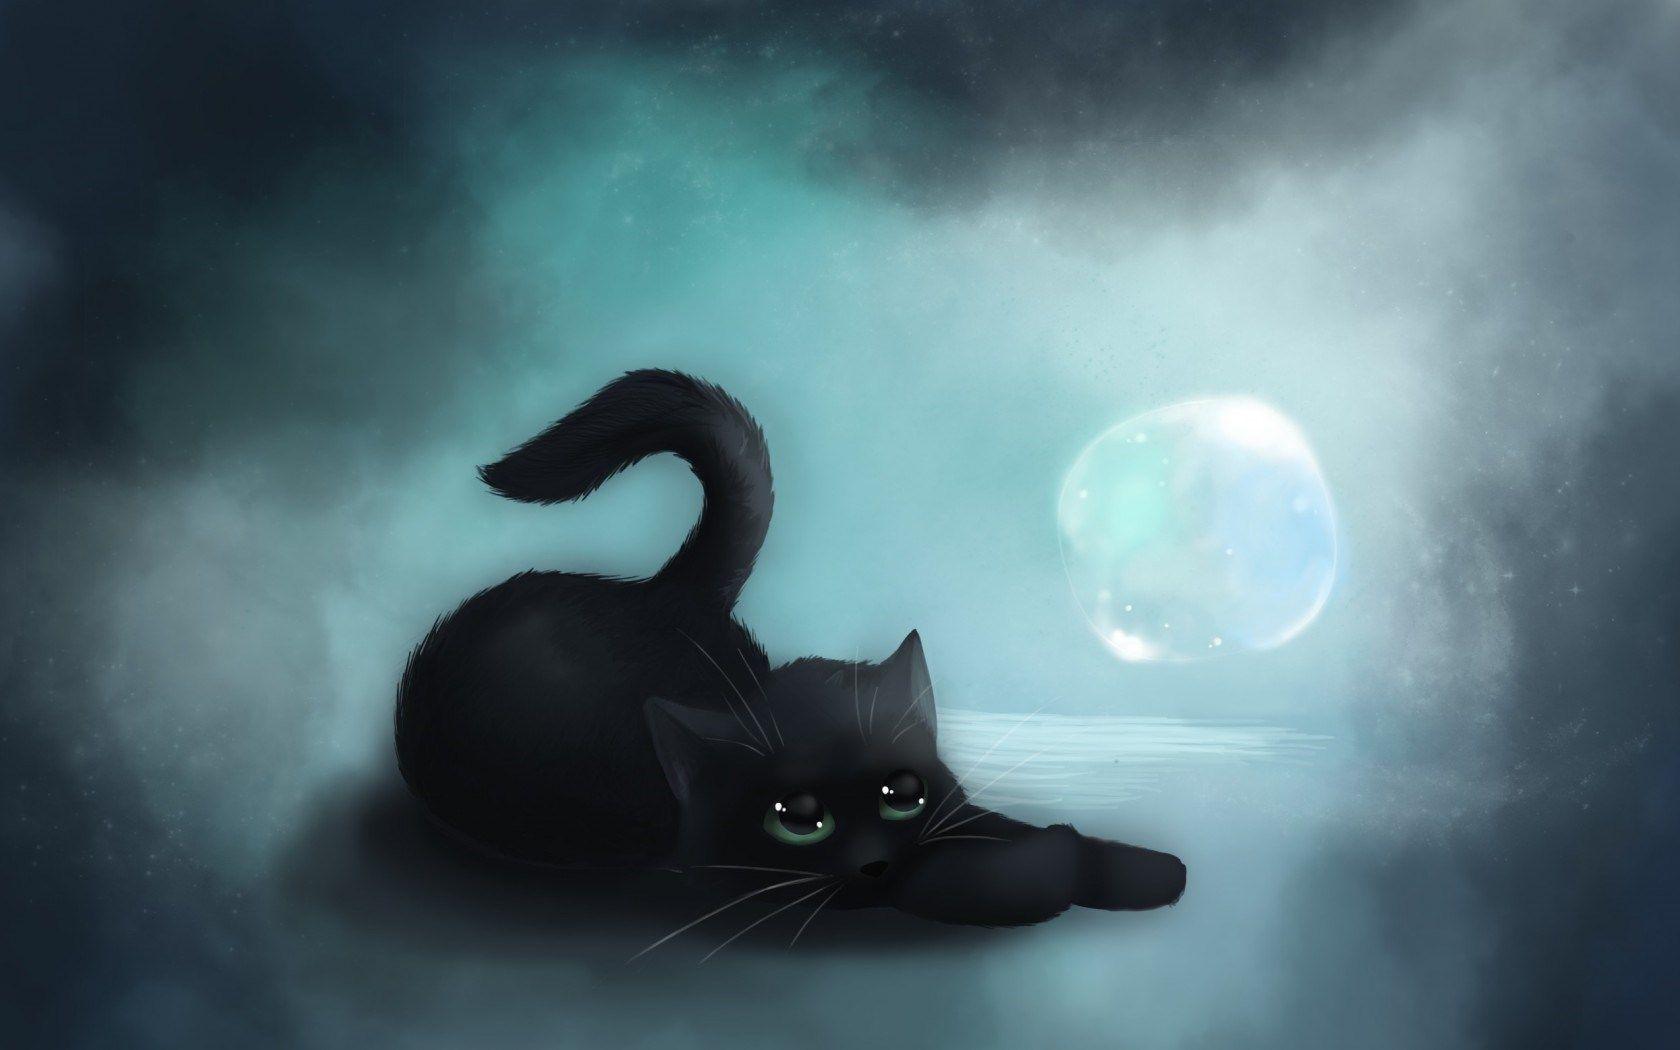 cat art. Black Cat In Moon Wallpaper Picture Wallpaper. High Resolution. Black cat art, Cat art, Art